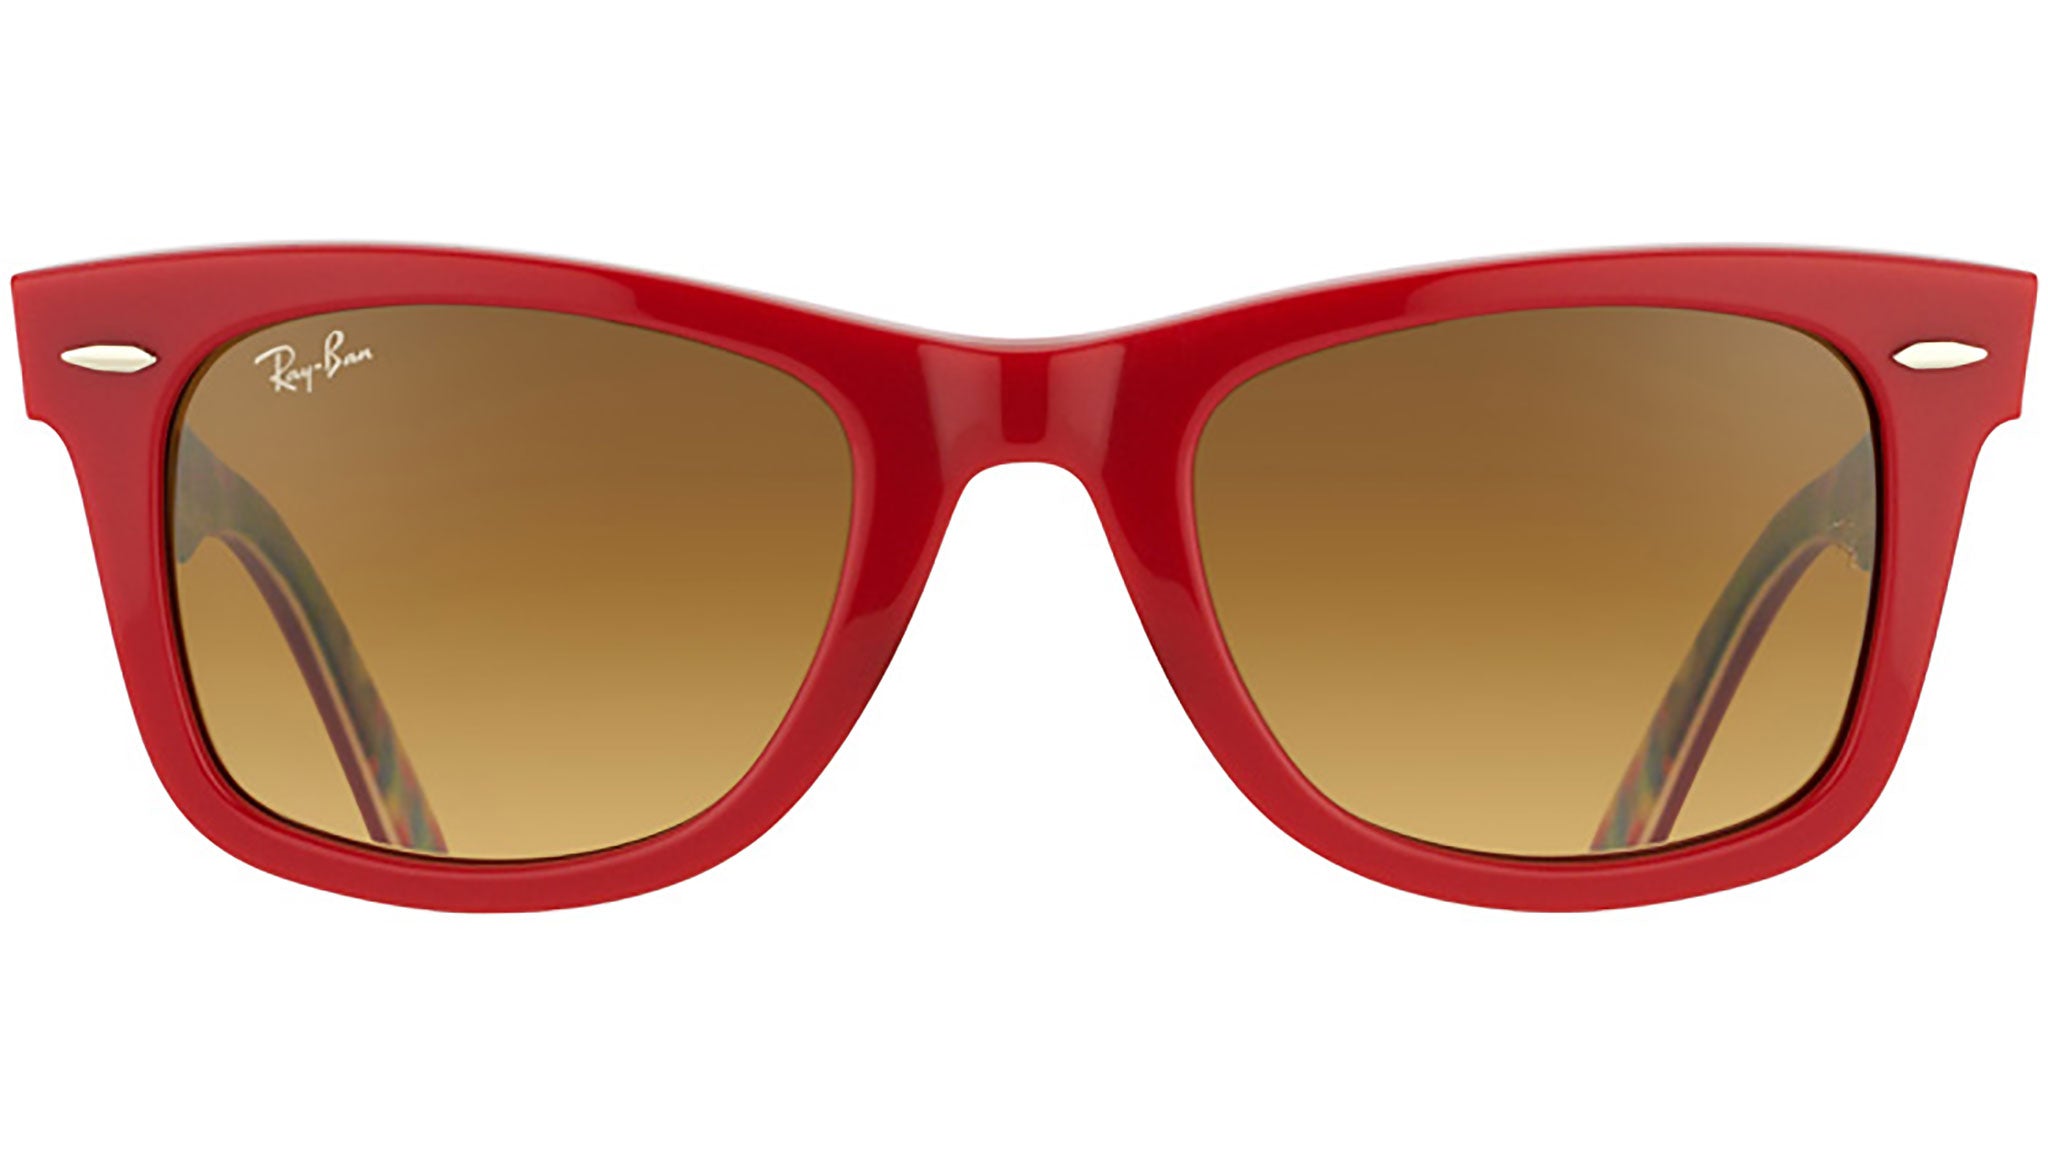 Interconnect Bermad Glad Ray-Ban Wayfarer Sunglasses RB2140 1133/85 Red Patchwork Series Rare Prints